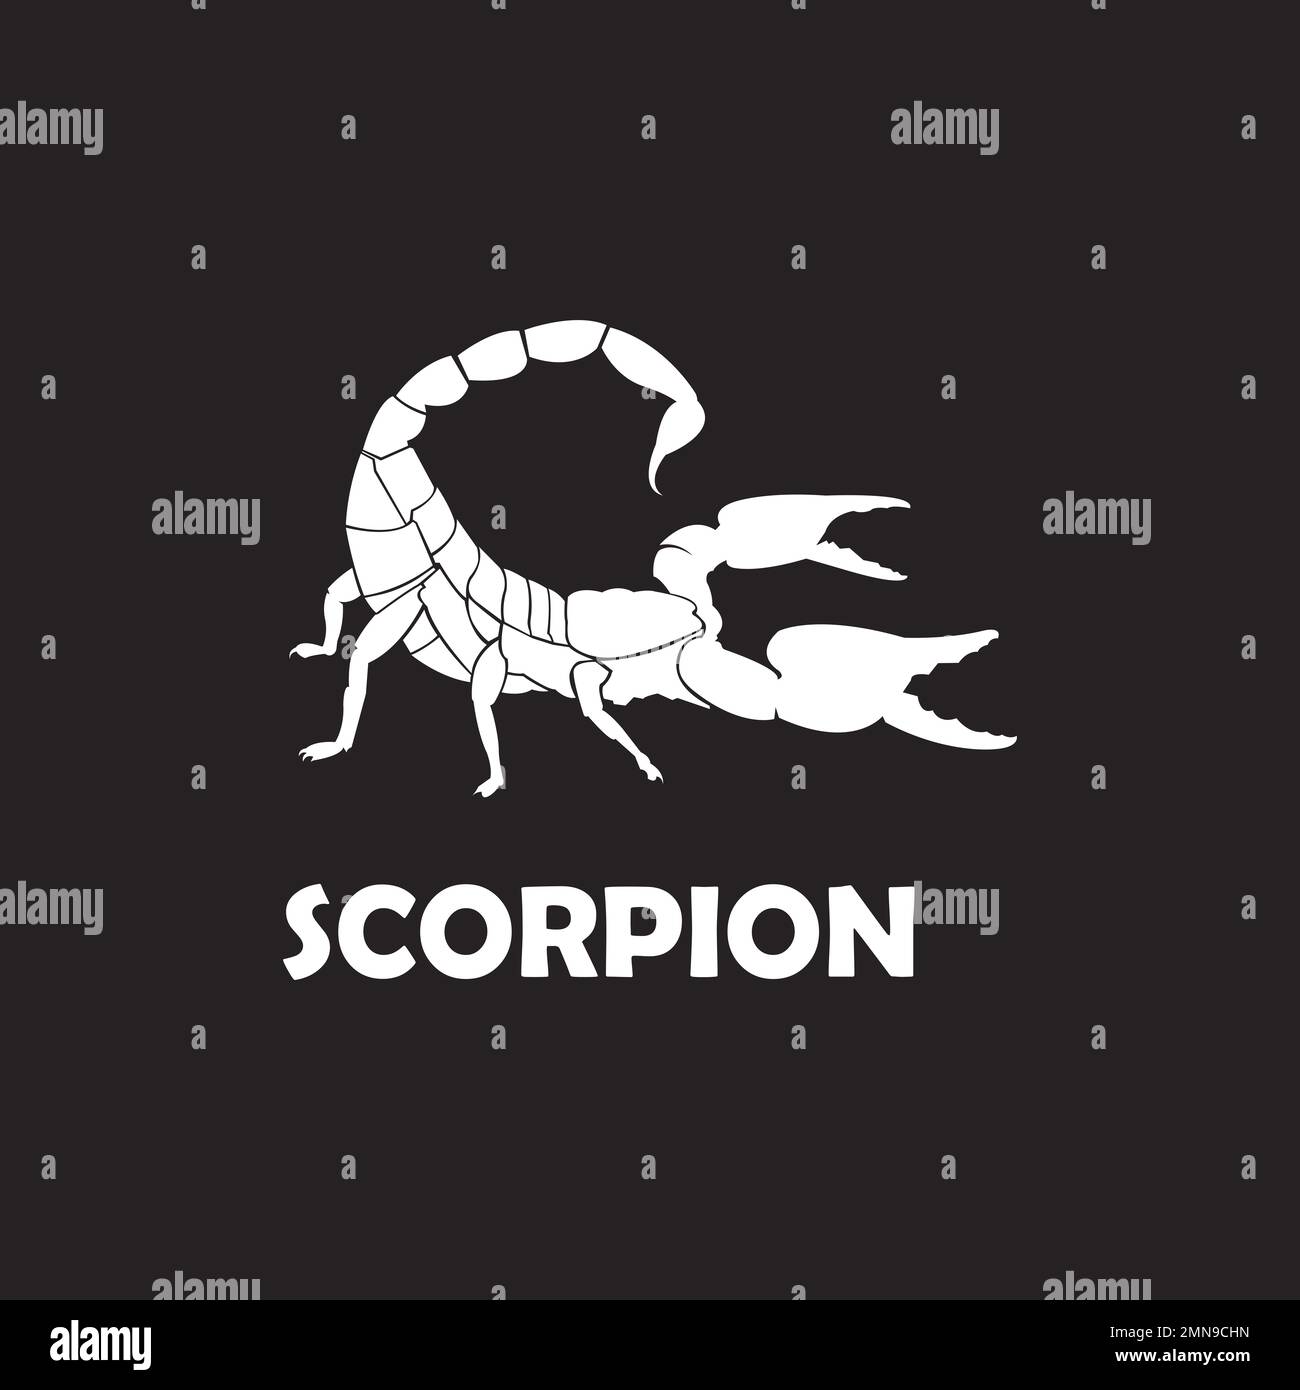 scorpion logo vector illustration design template Stock Photo - Alamy